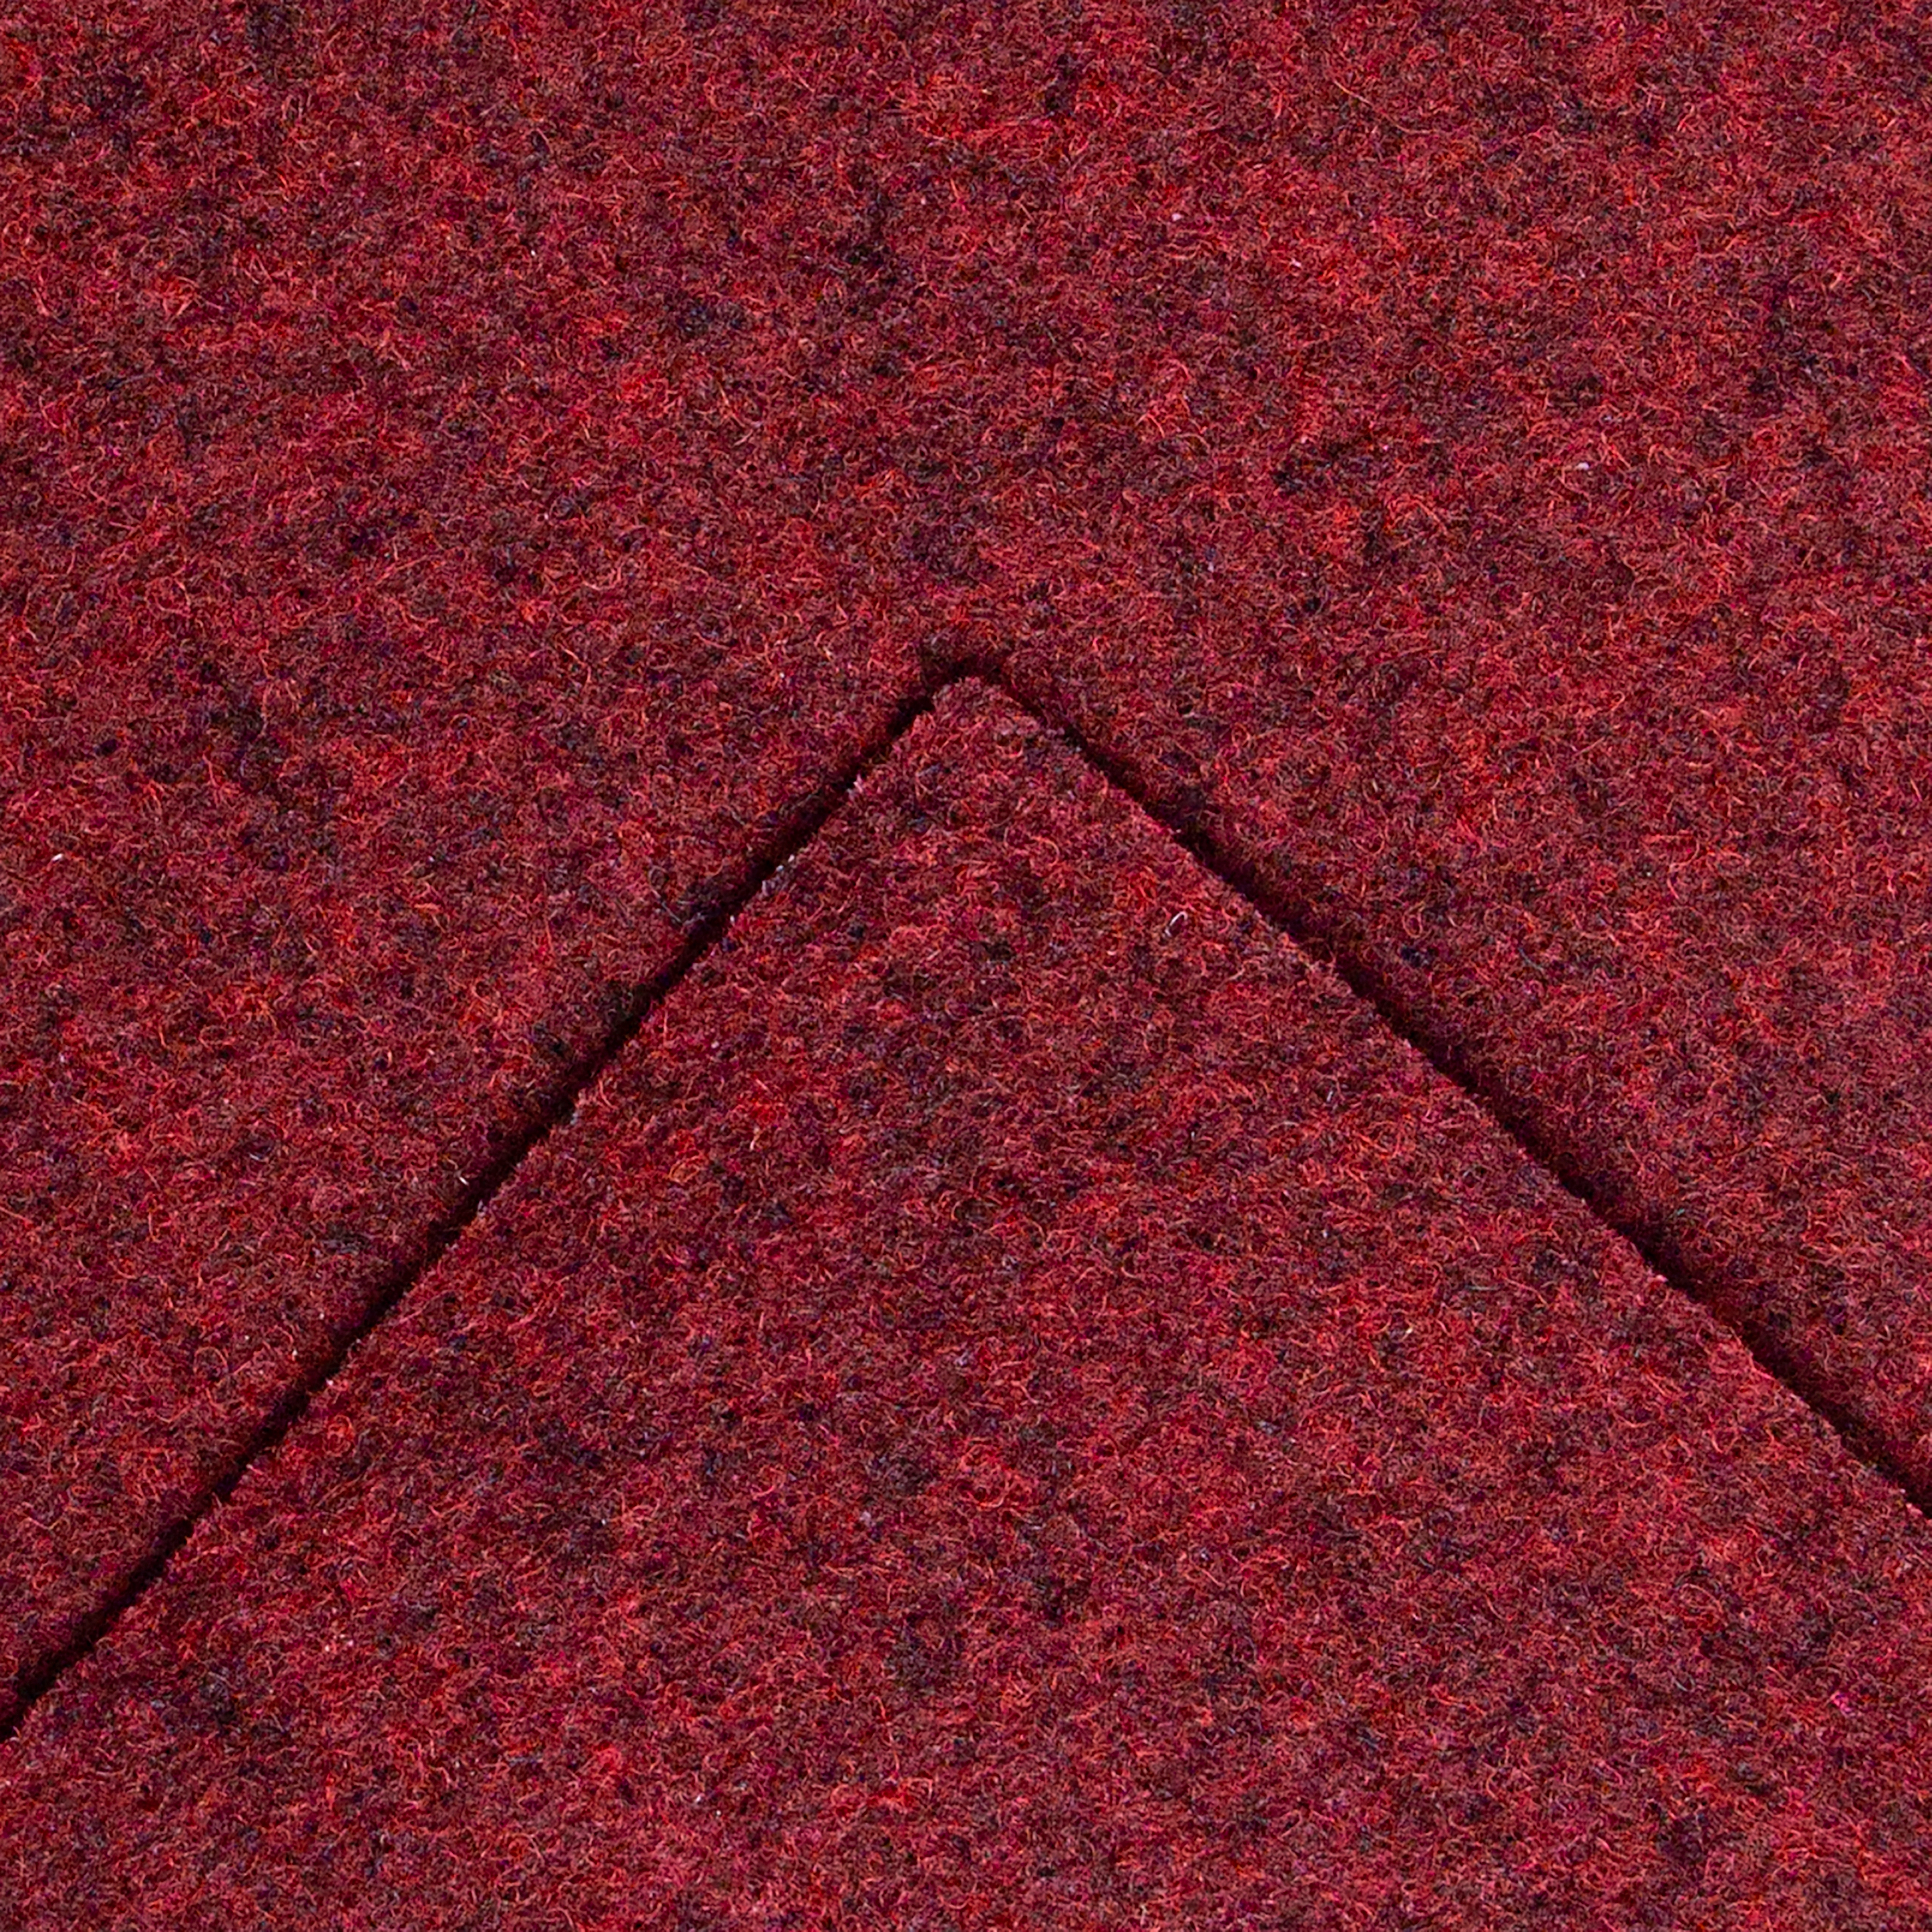 Andiamo Teppichboden Nadelfilz Manchester Rot Meterware Breite: 200 cm  kaufen bei OBI